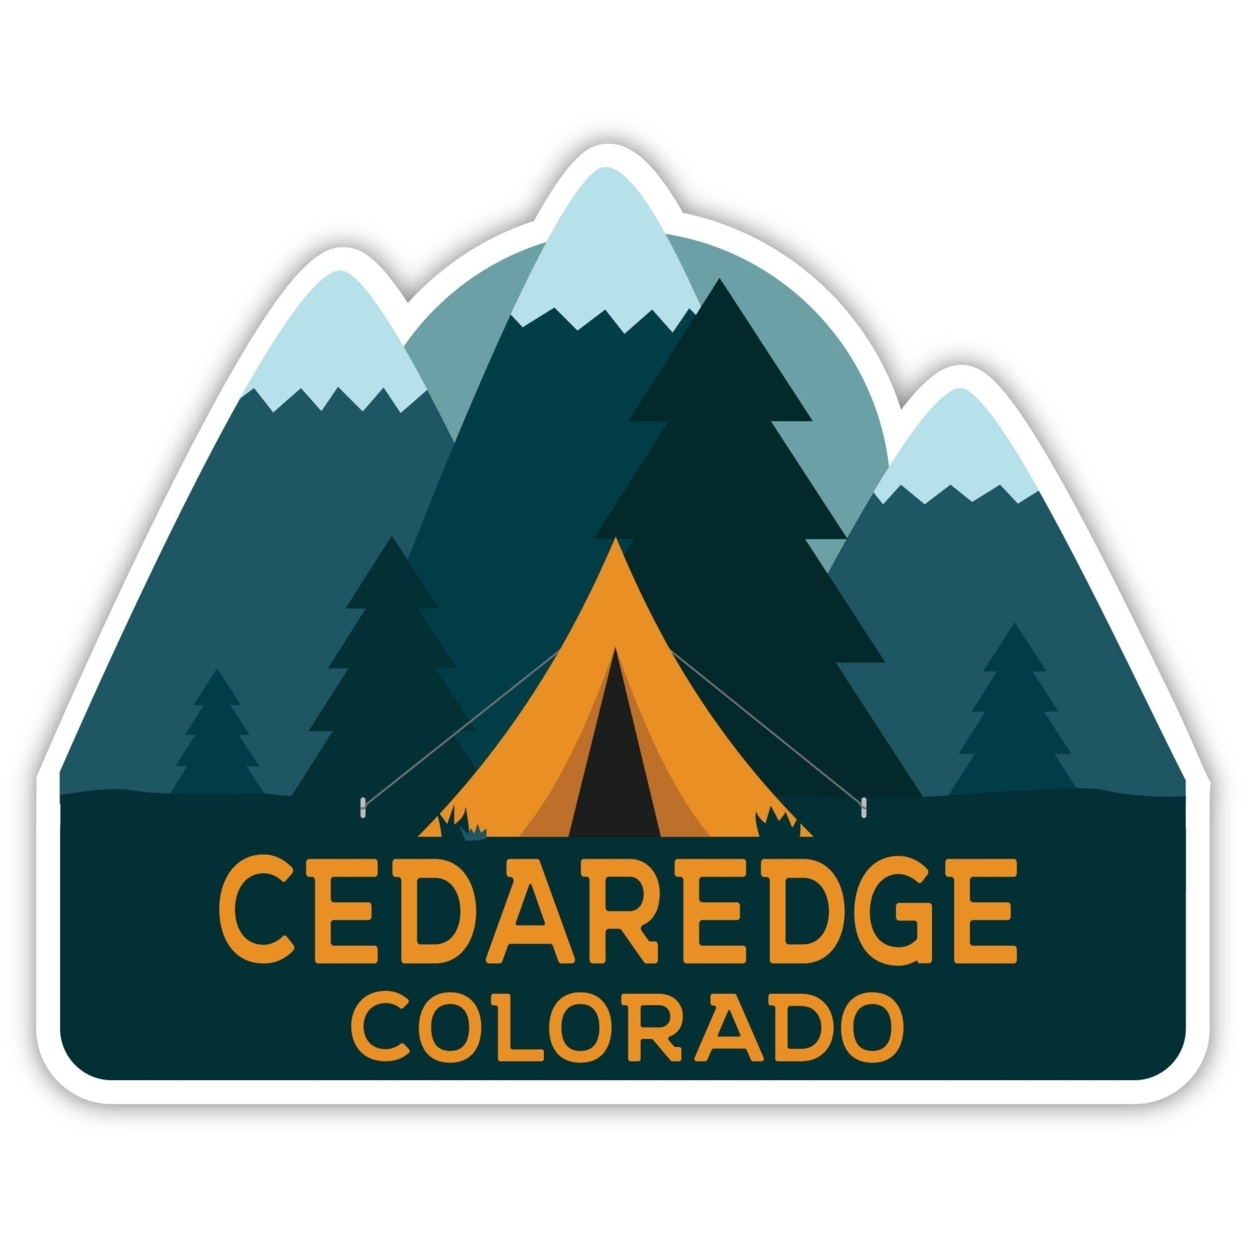 Cedaredge Colorado Souvenir Decorative Stickers (Choose Theme And Size) - 4-Pack, 4-Inch, Tent